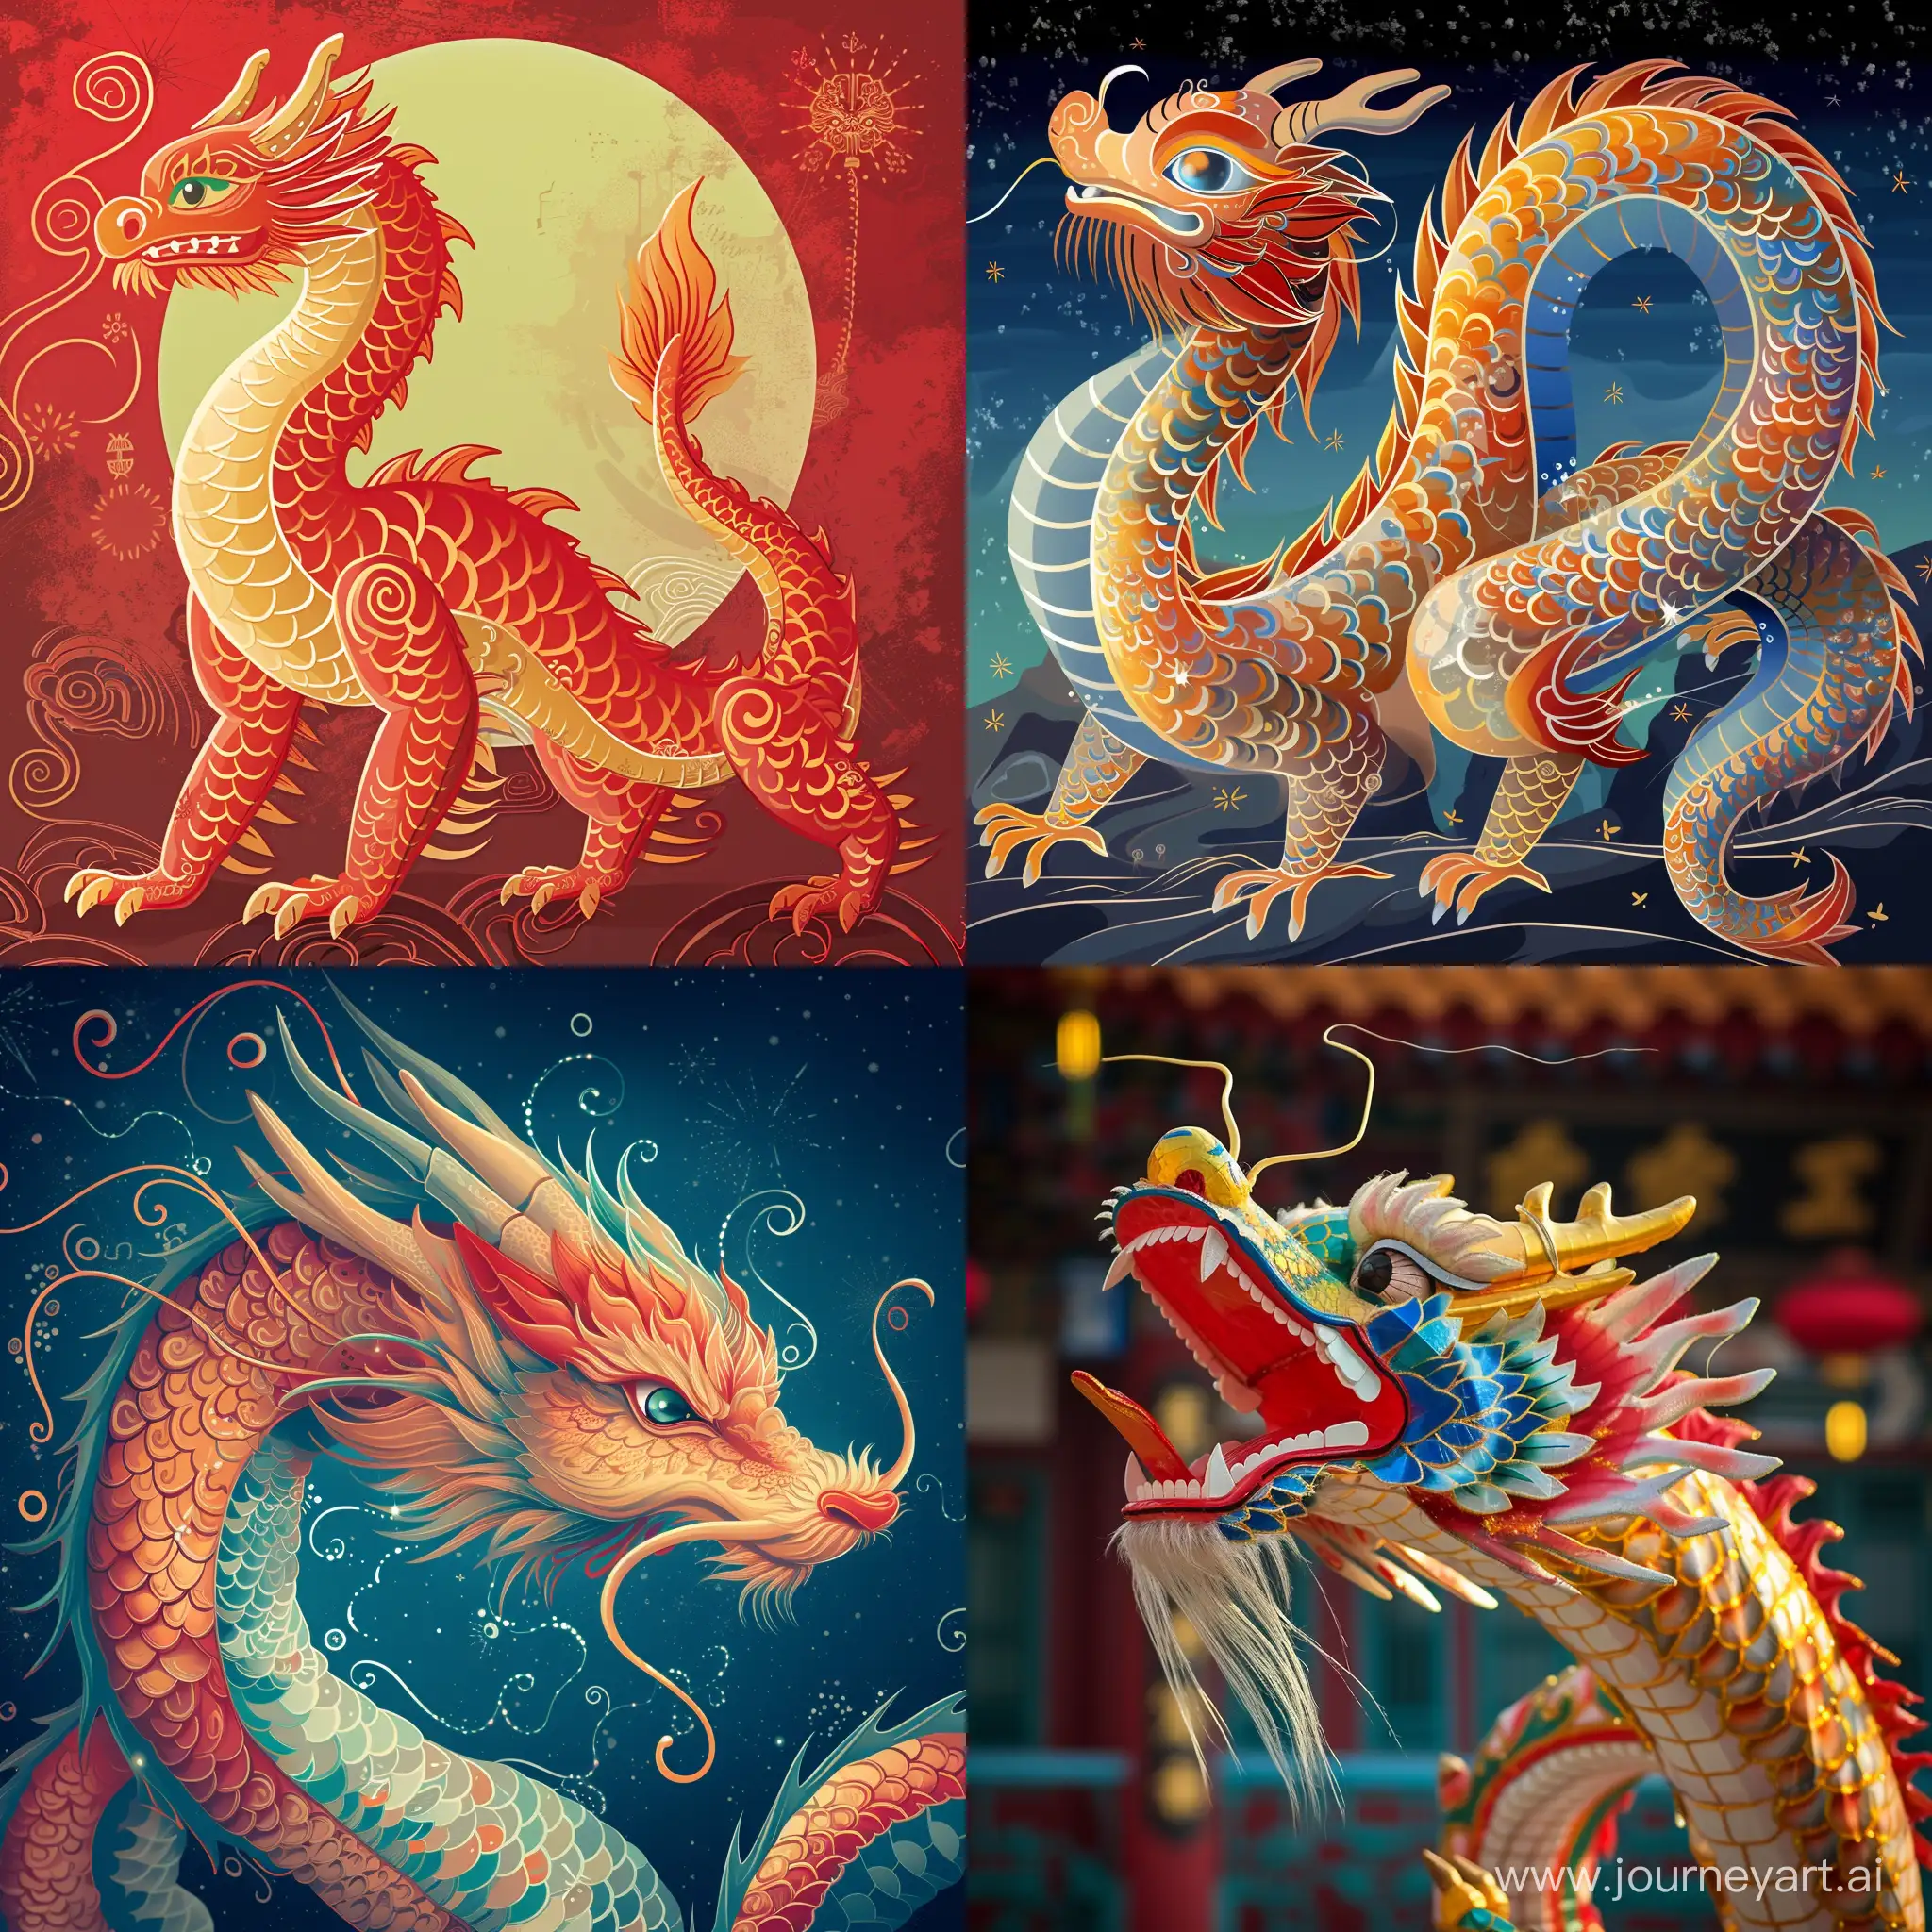 Joyful-Year-of-the-Dragon-Celebration